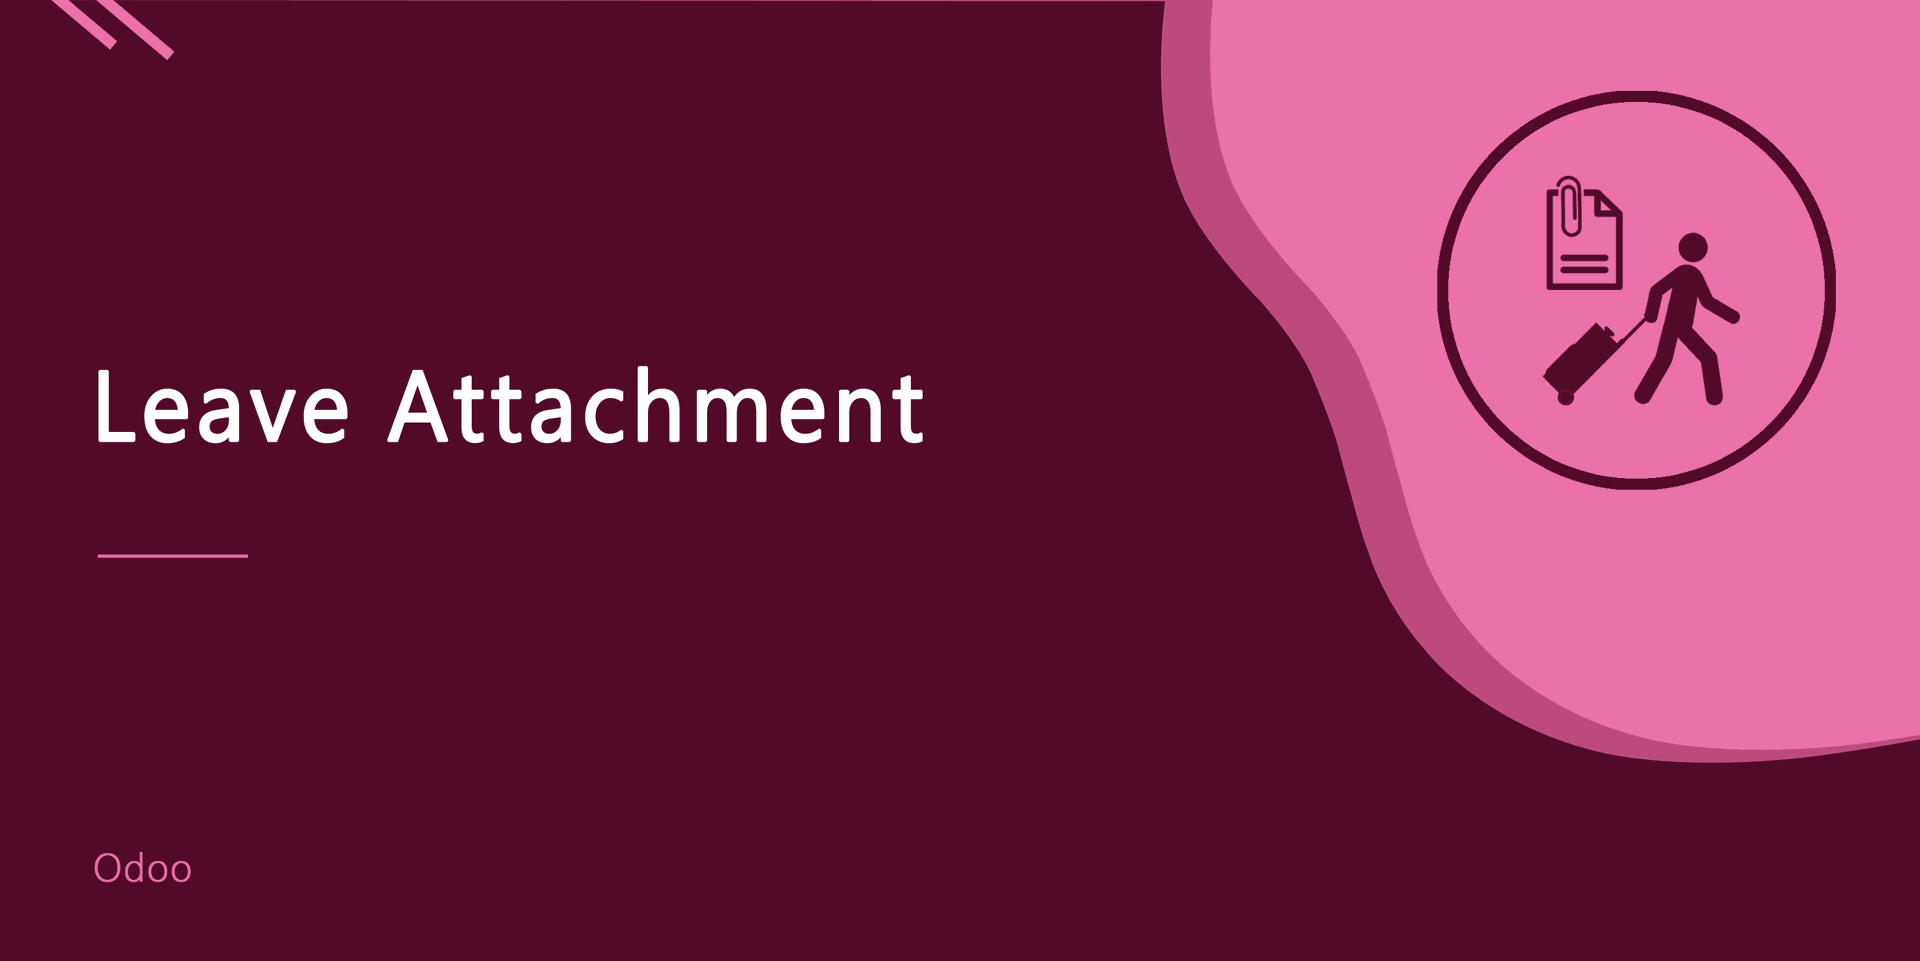 Leave A
                    ttachment